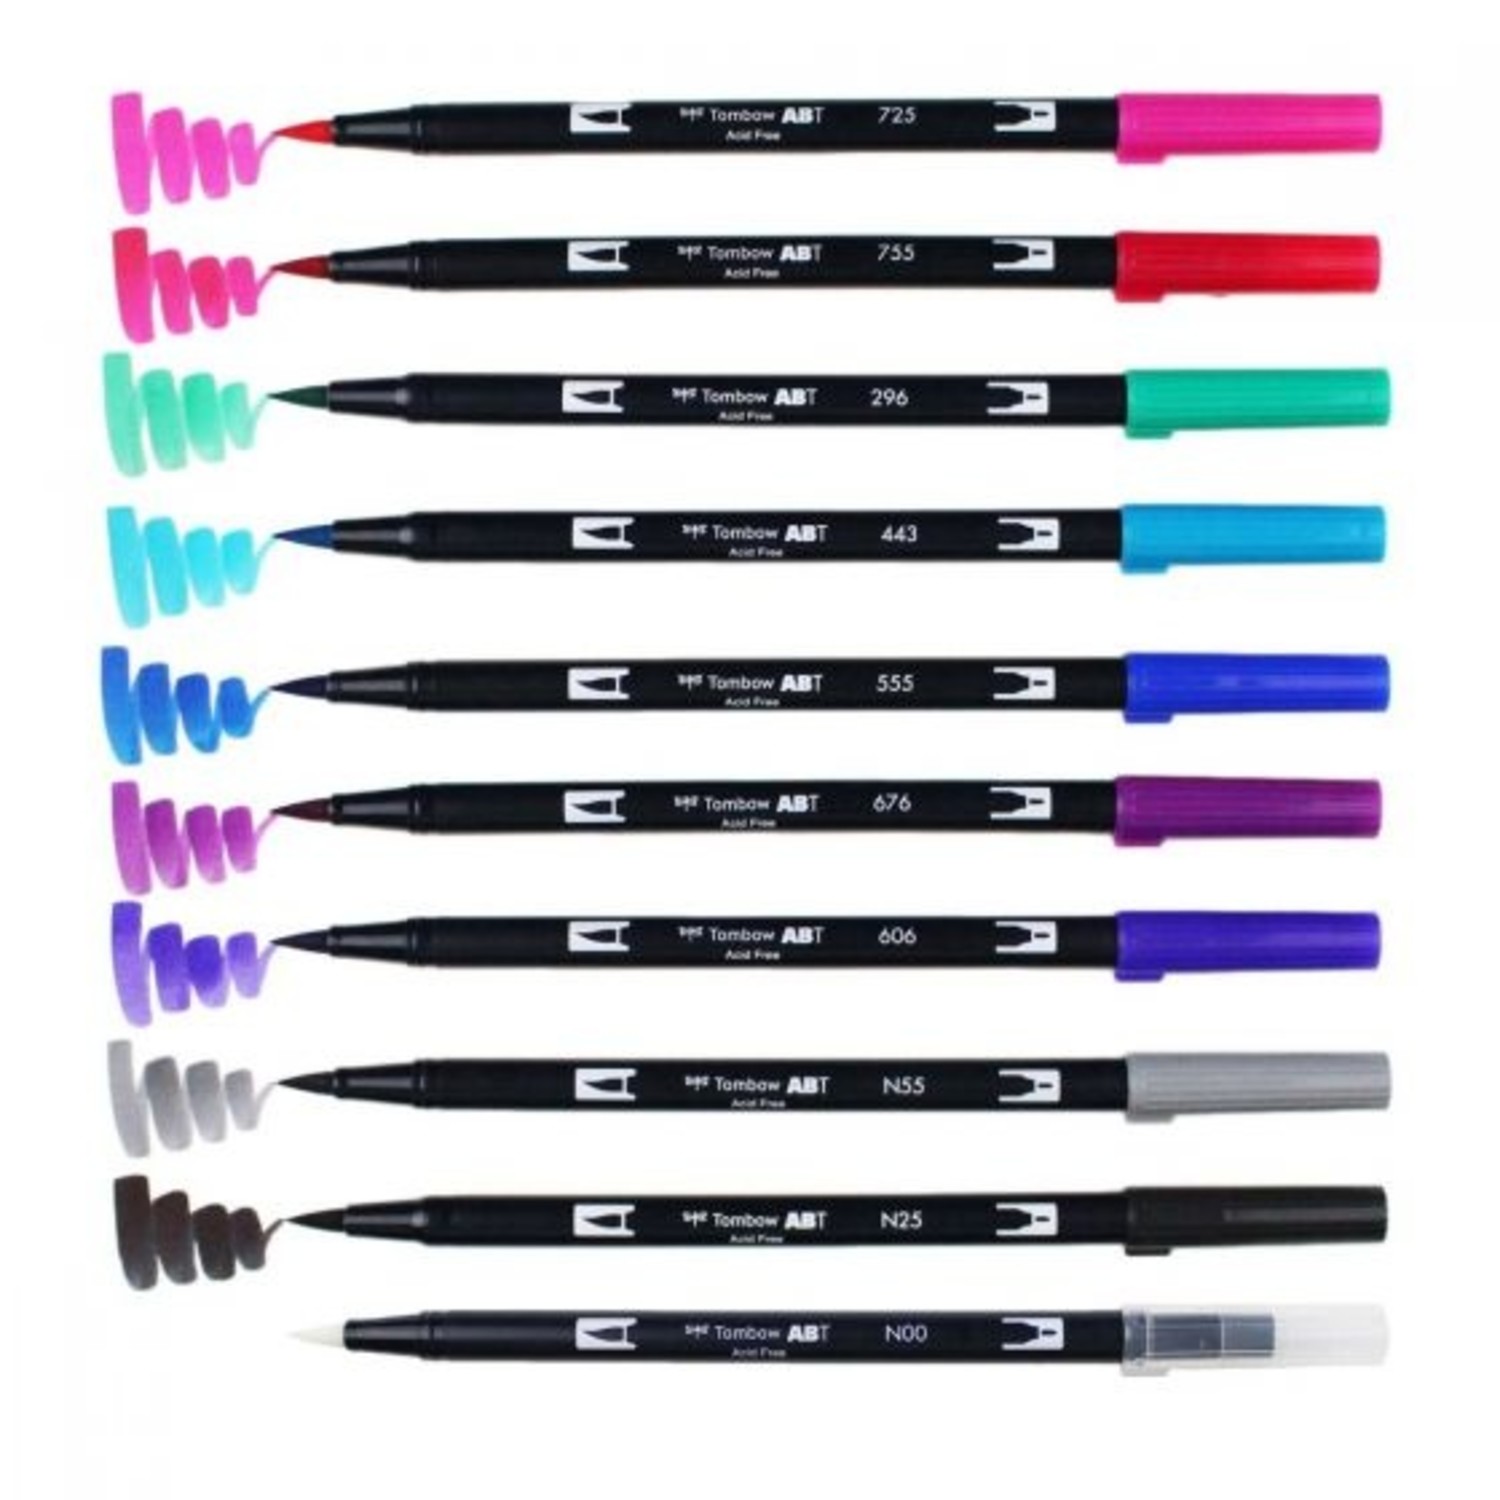 Tombow Dual Brush Pen Set of 10 - Galaxy Colors